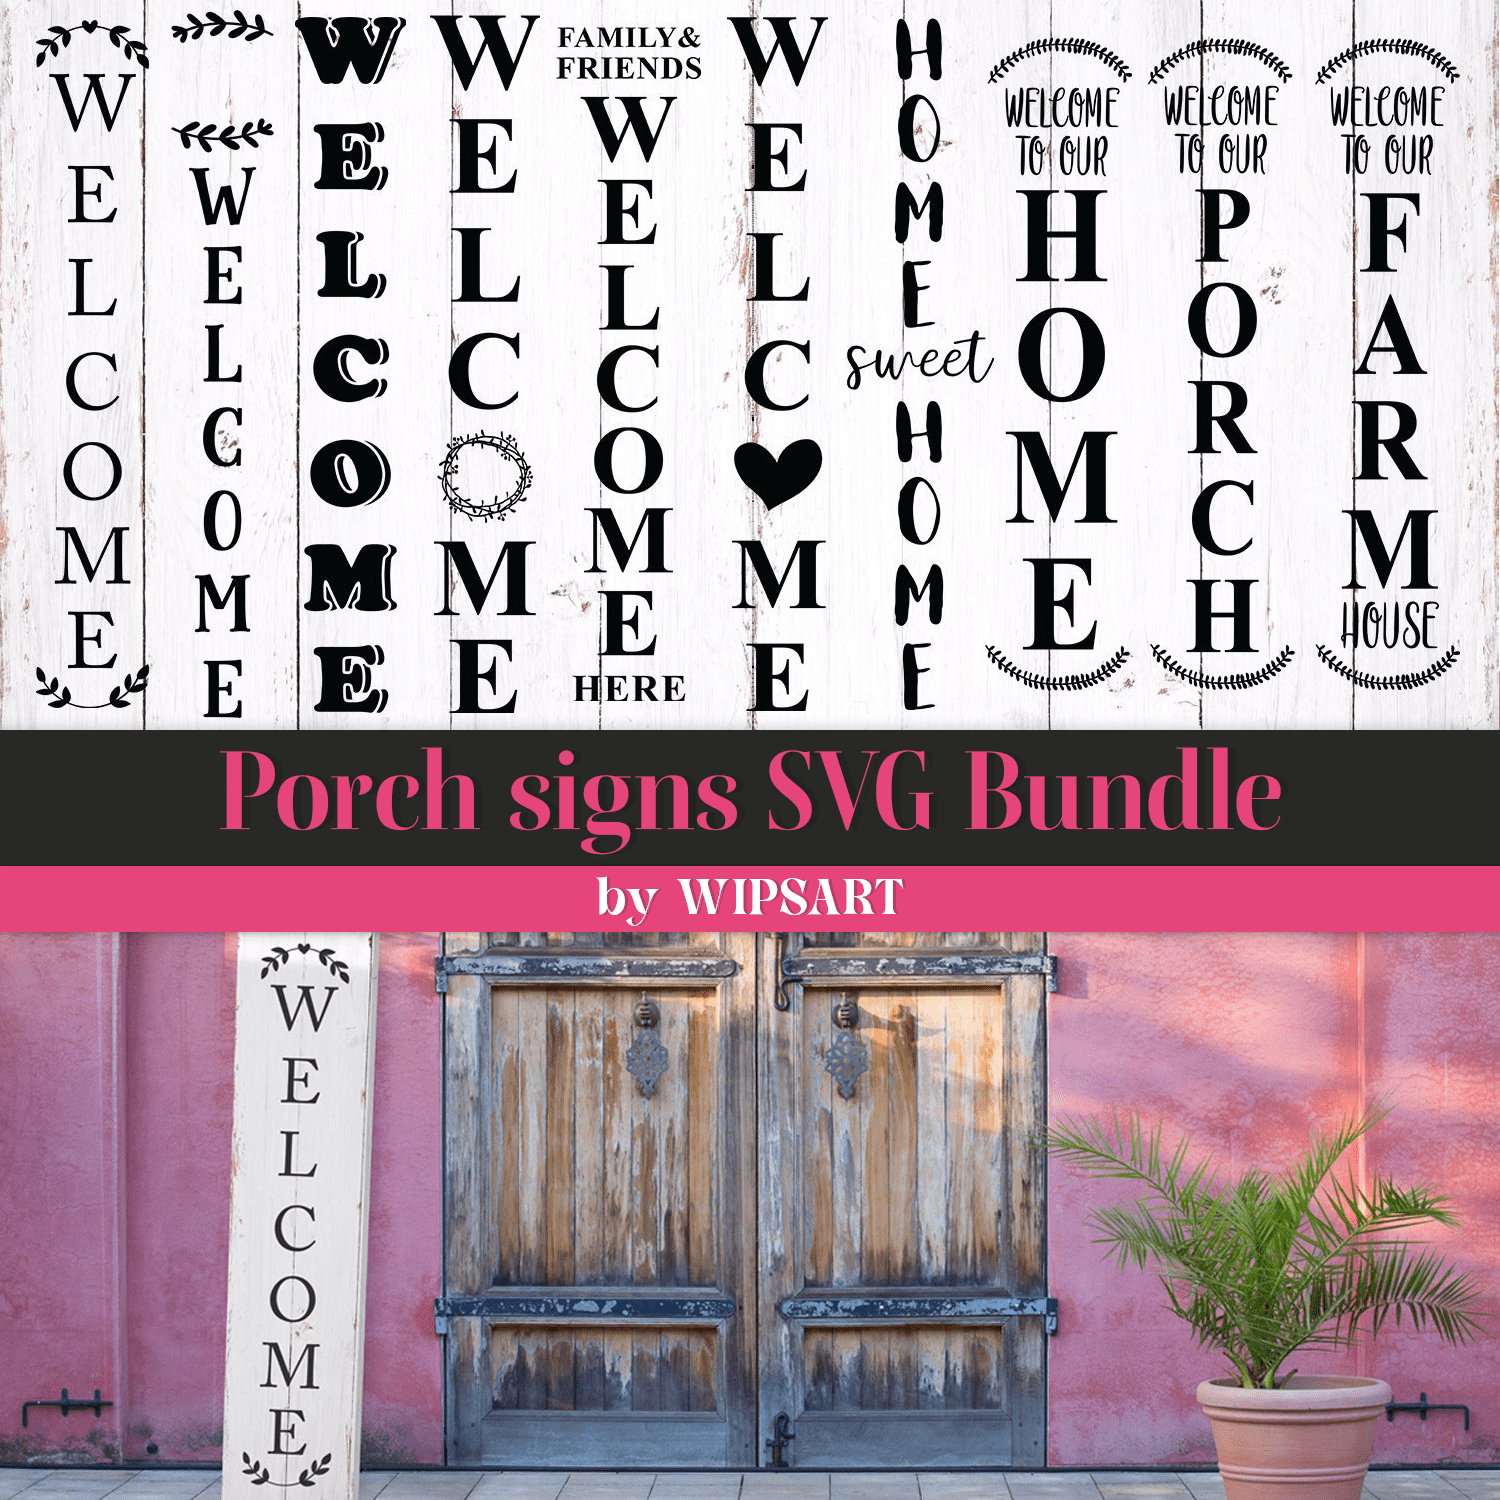 Porch signs SVG Bundle, Welcome Porch Sign SVG cover.